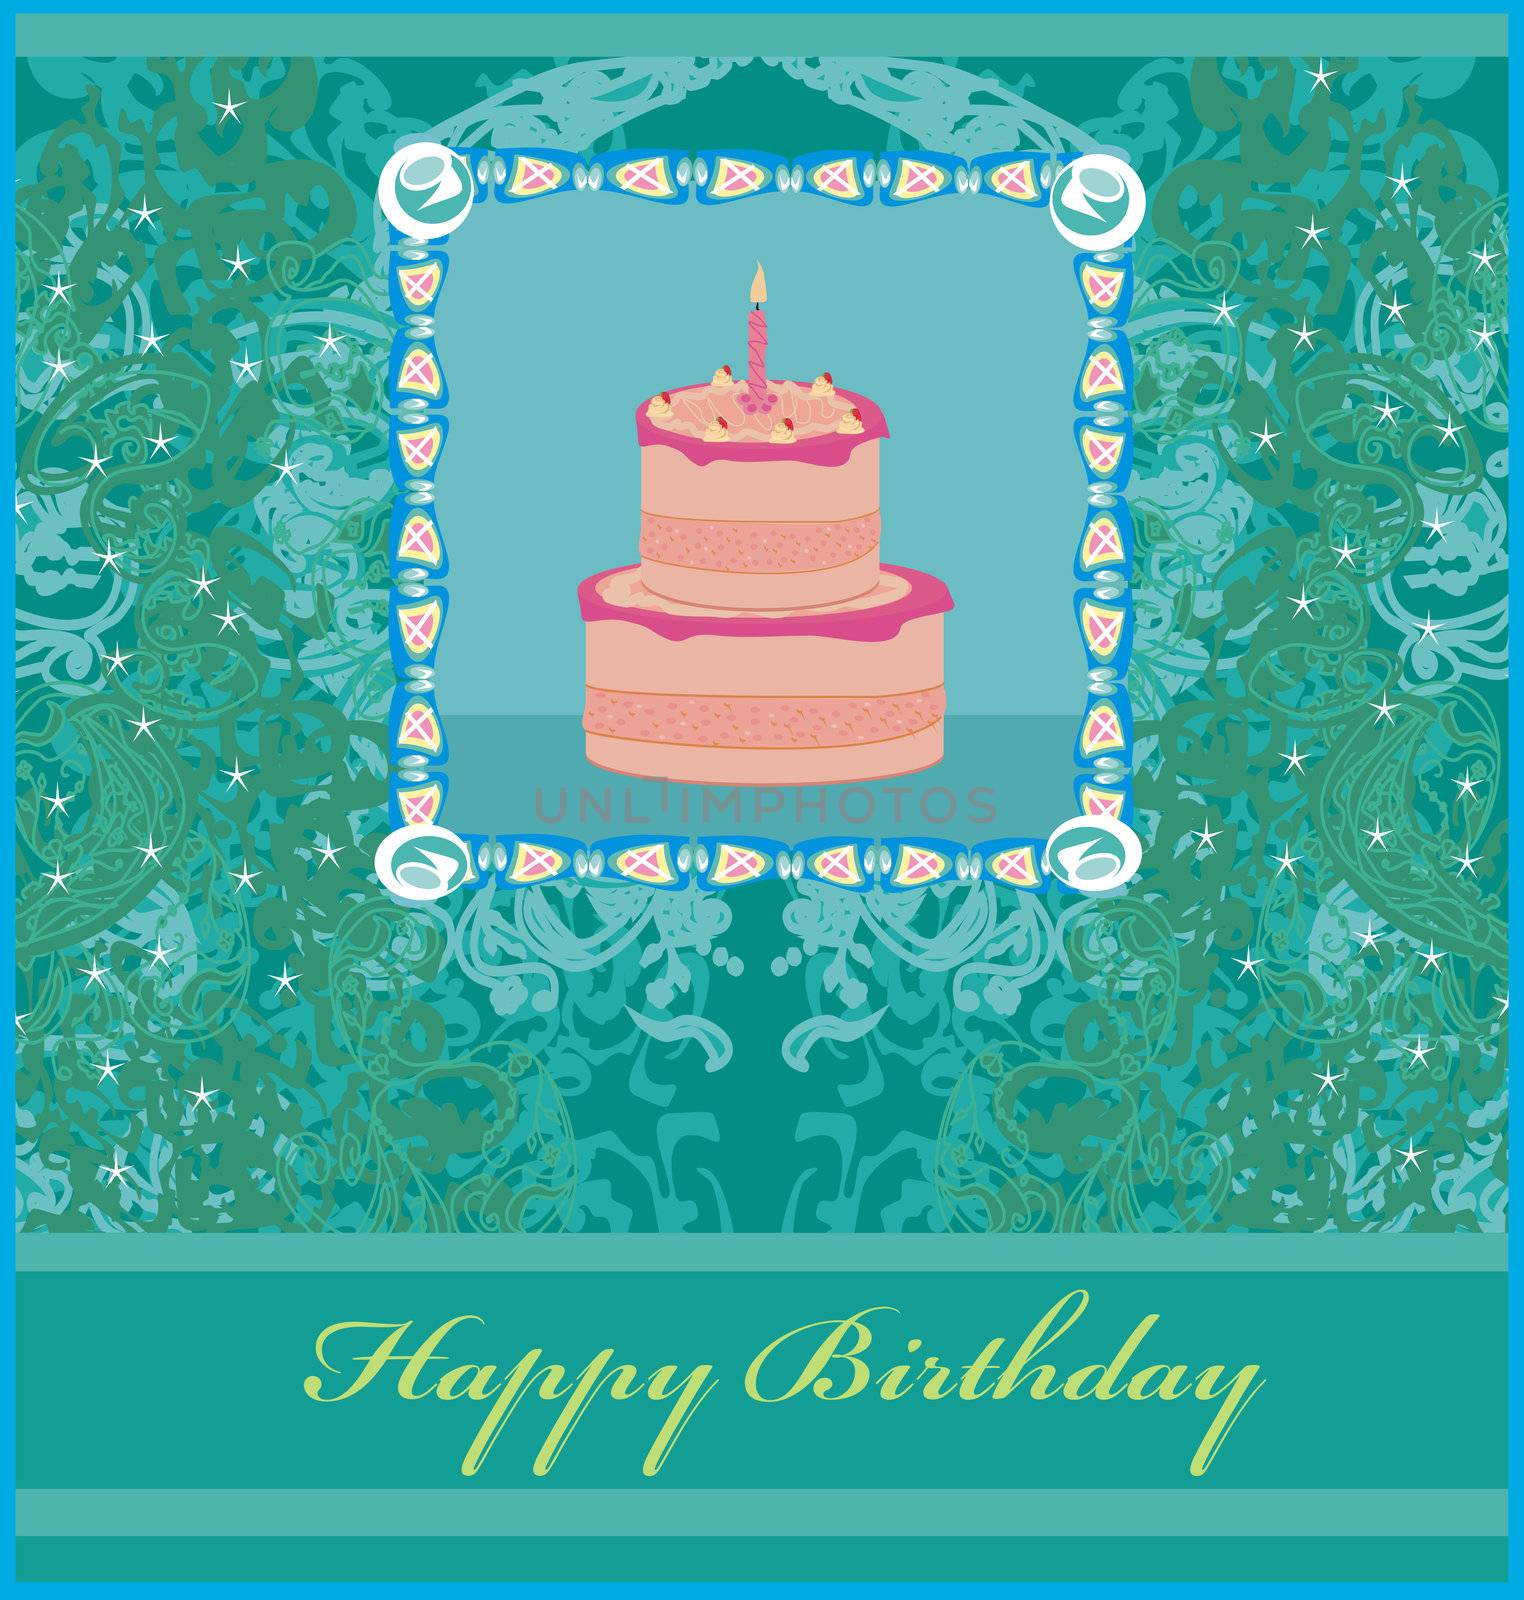 Happy Birthday Card by JackyBrown